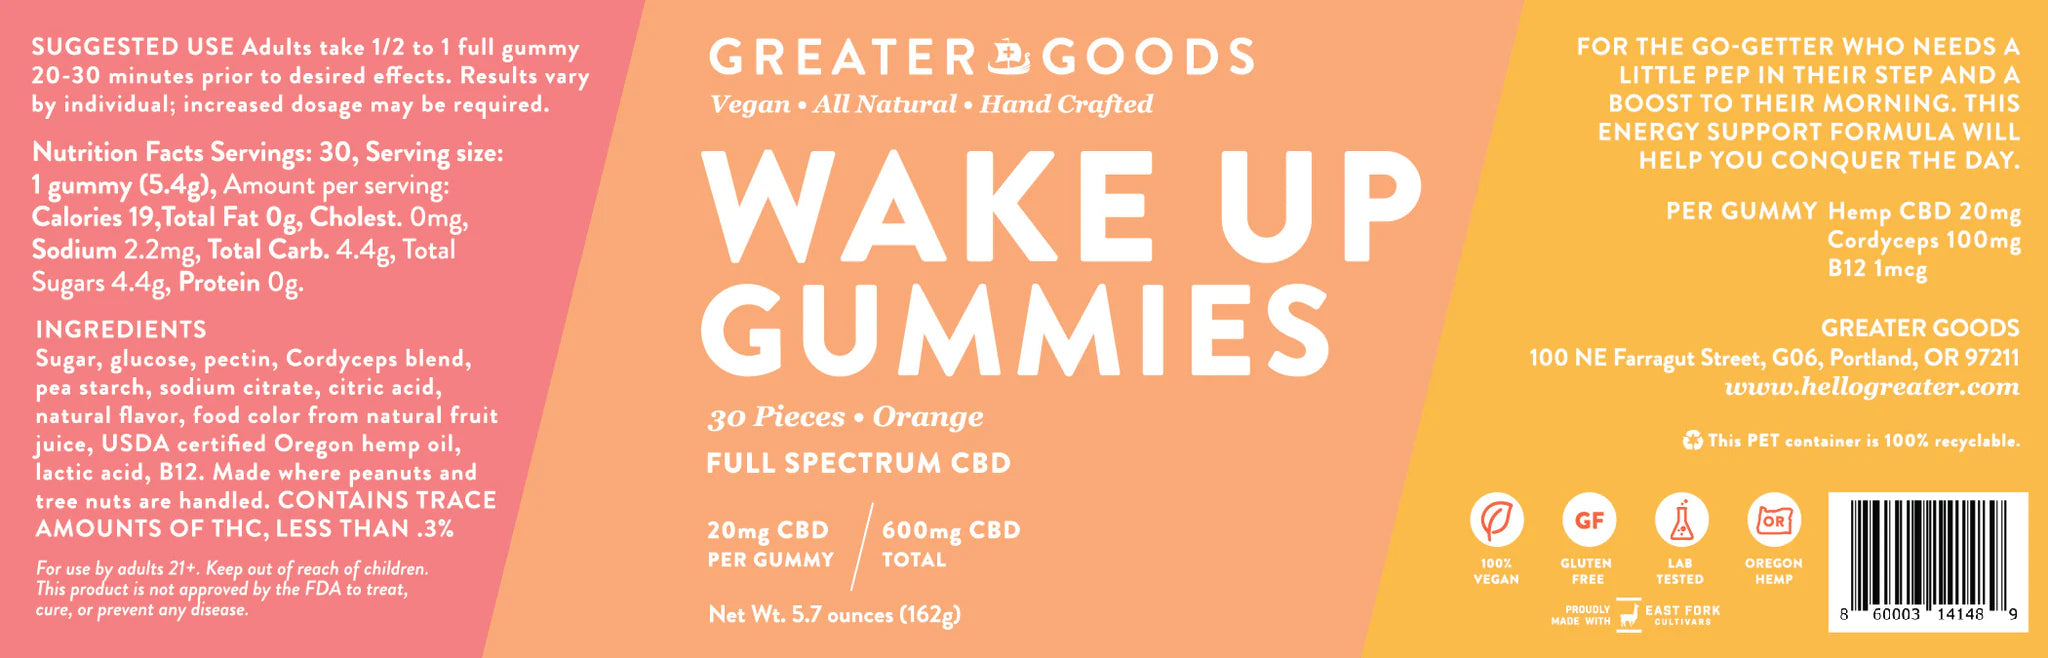 Greater Goods, Full Spectrum, CBD Gummies, Wake Up, Orange Flavor, 30pc, 600mg CBD